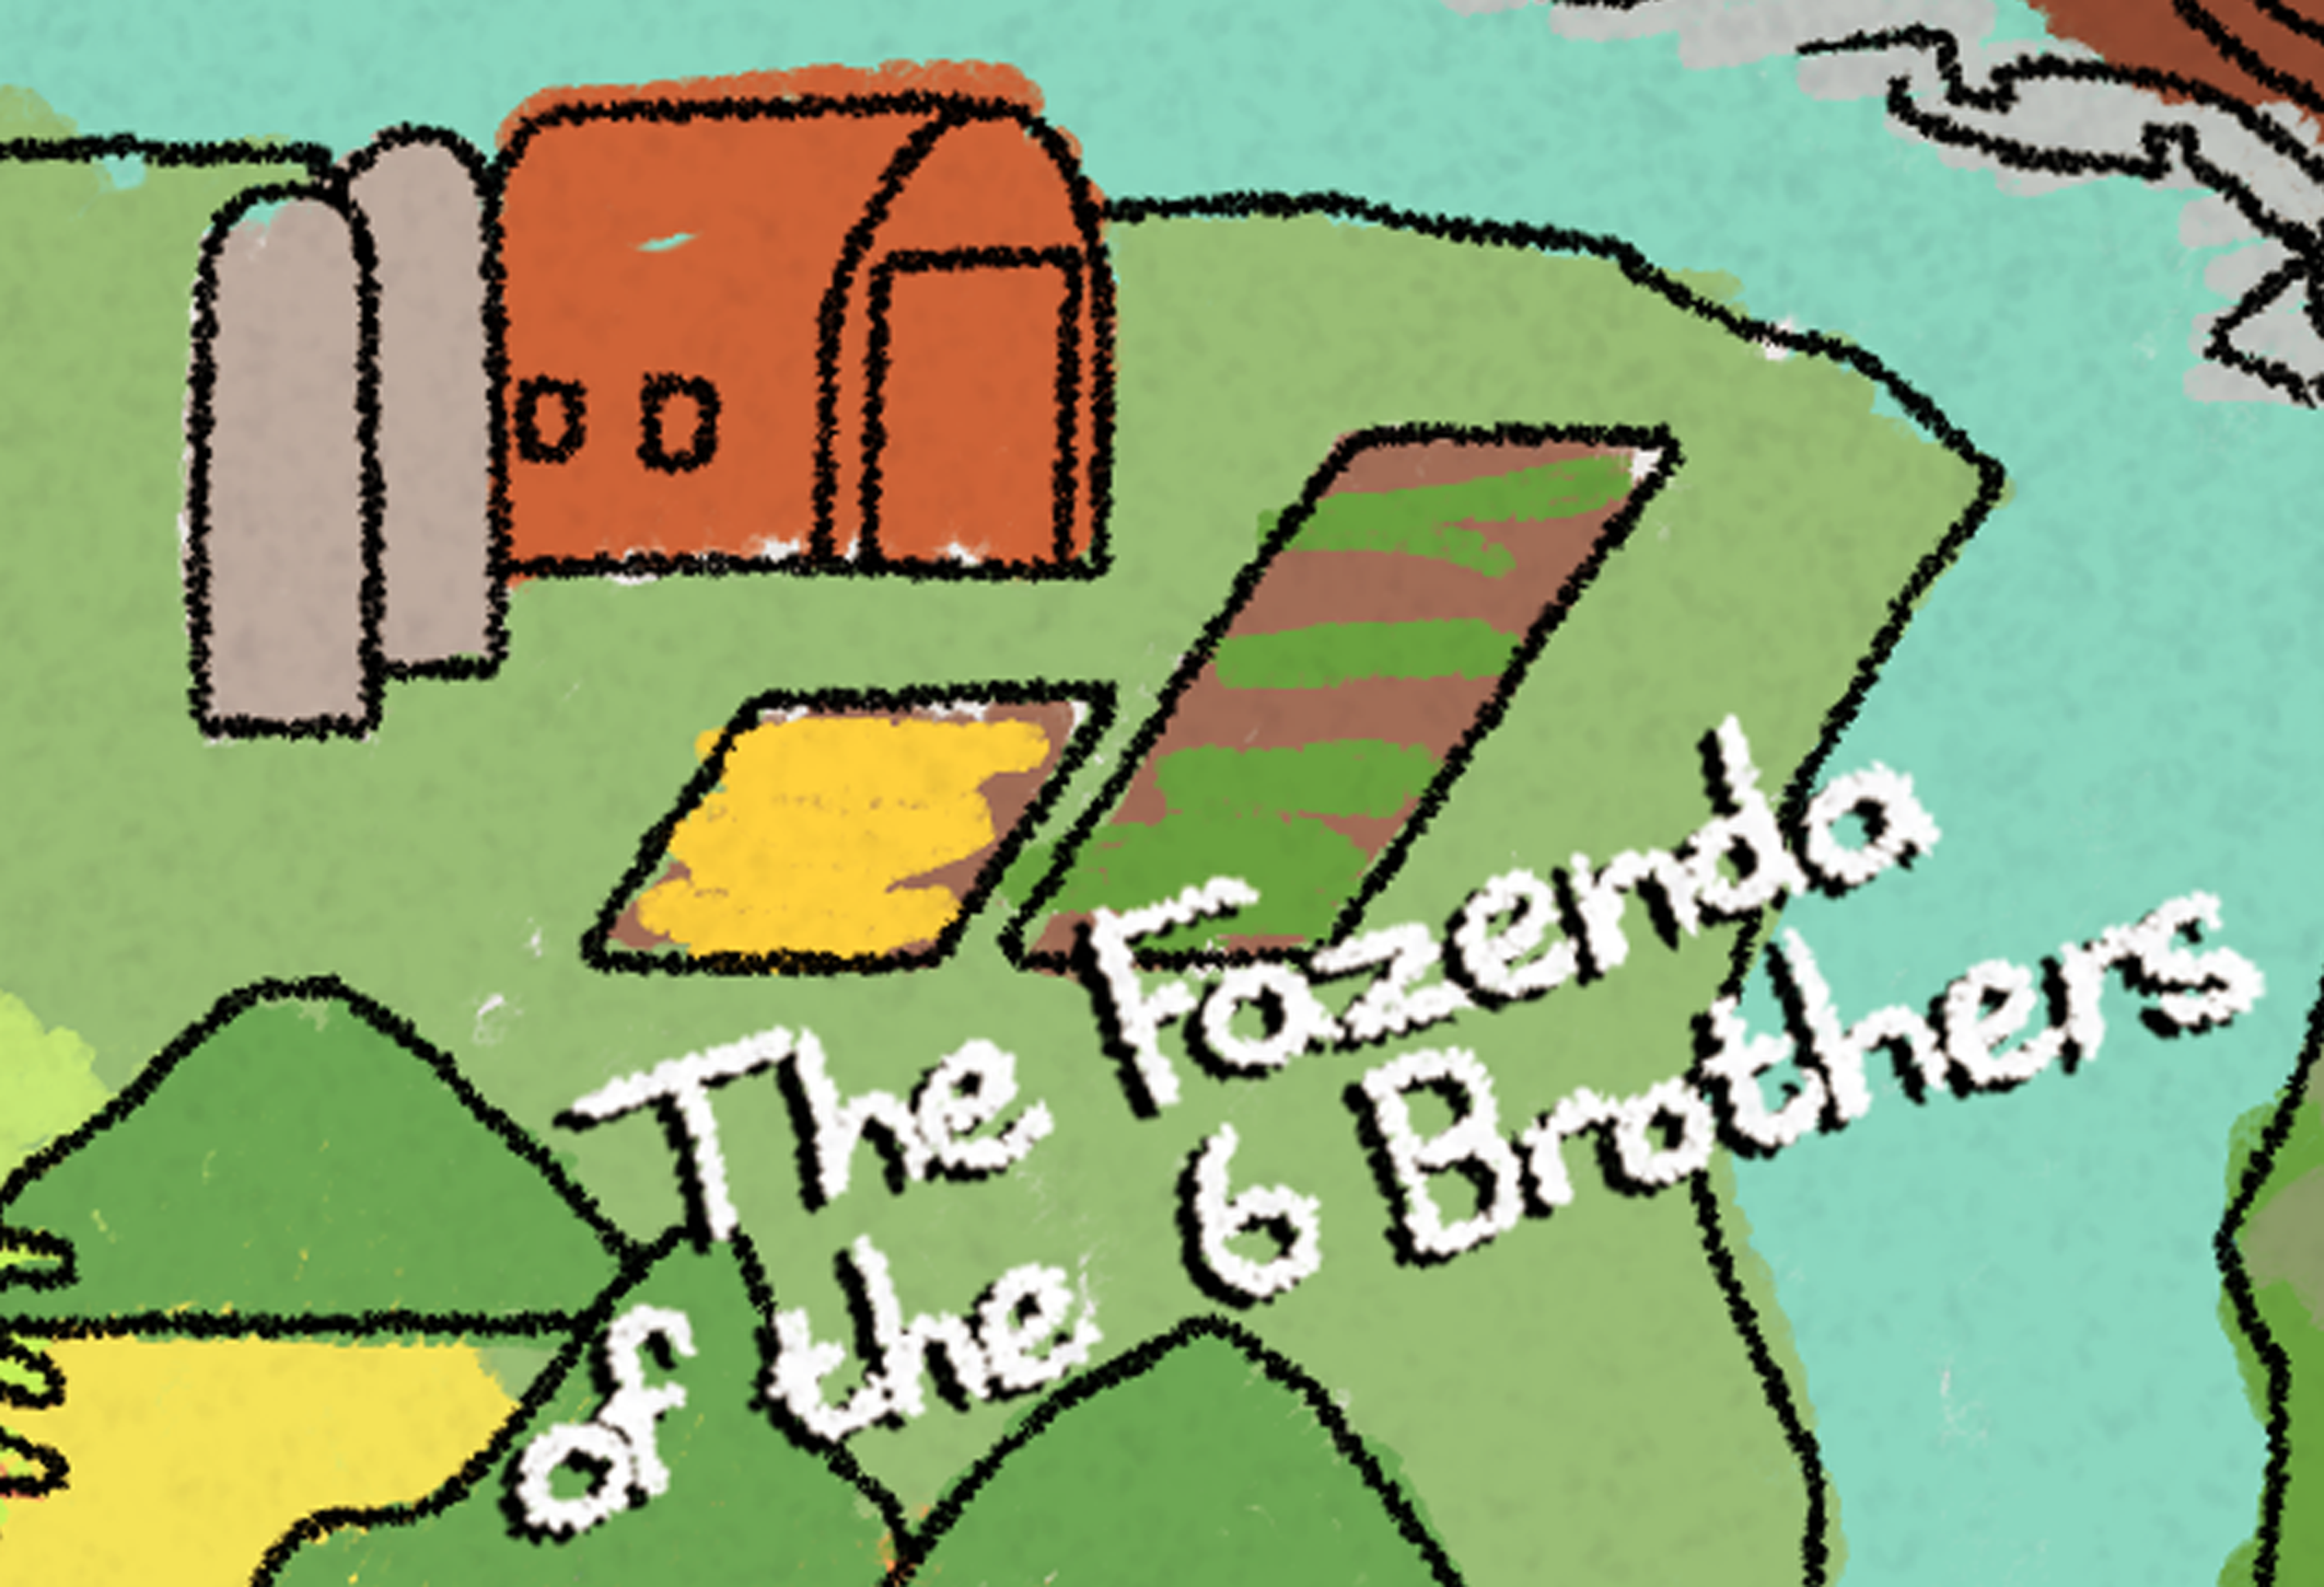 Fazenda of the Six Brothers